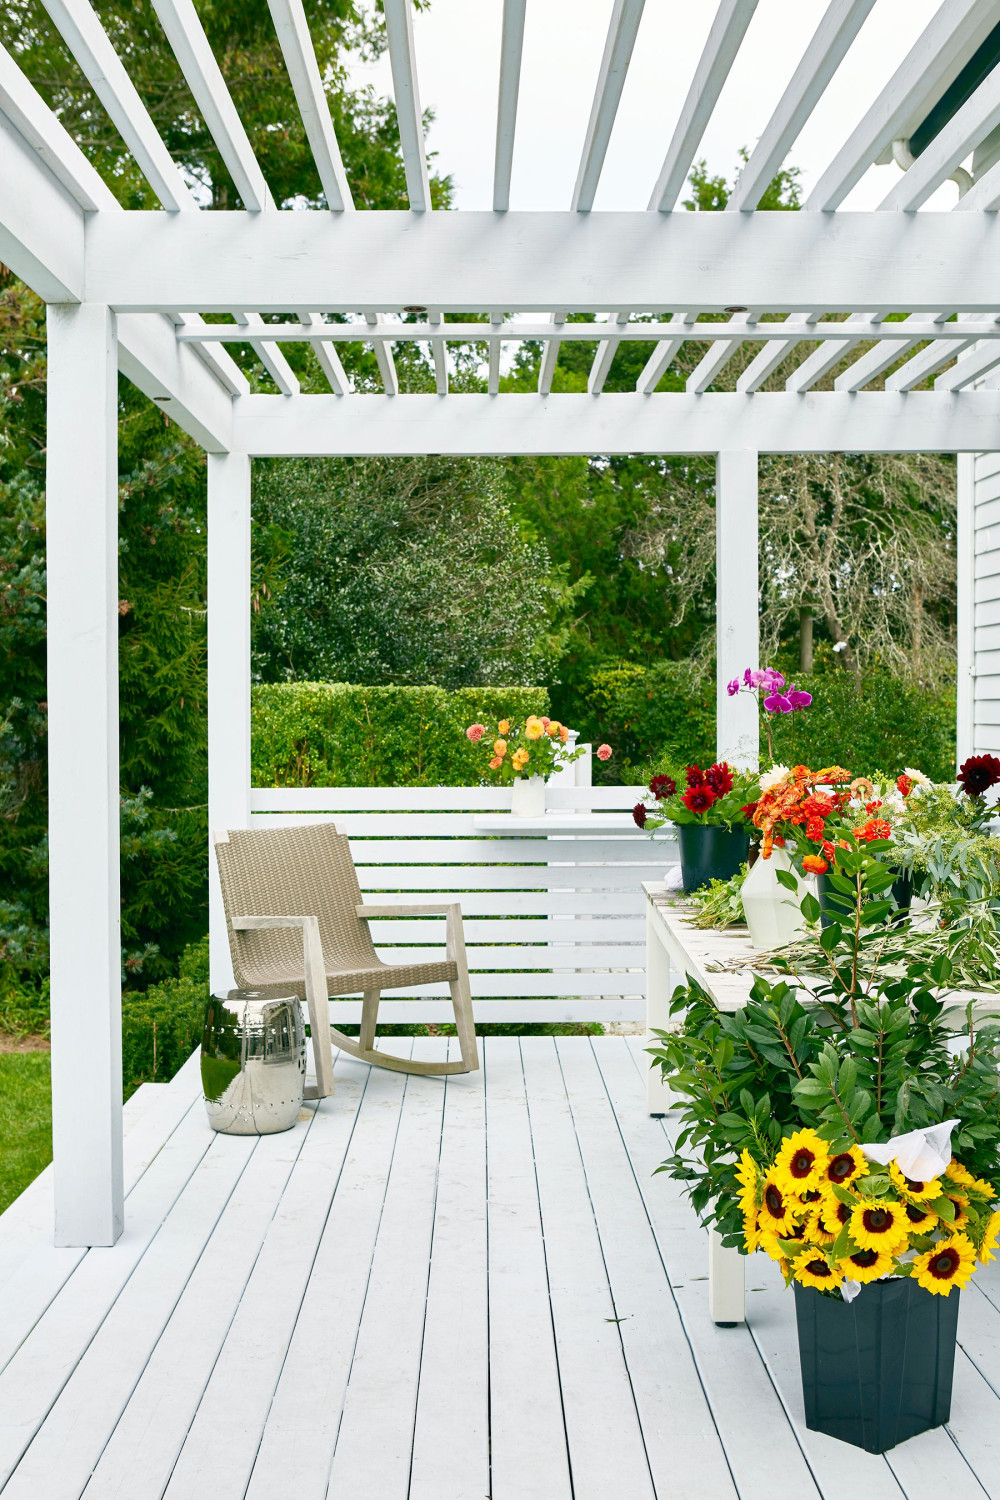 Creative Deck Ideas - Beautiful Outdoor Deck Designs